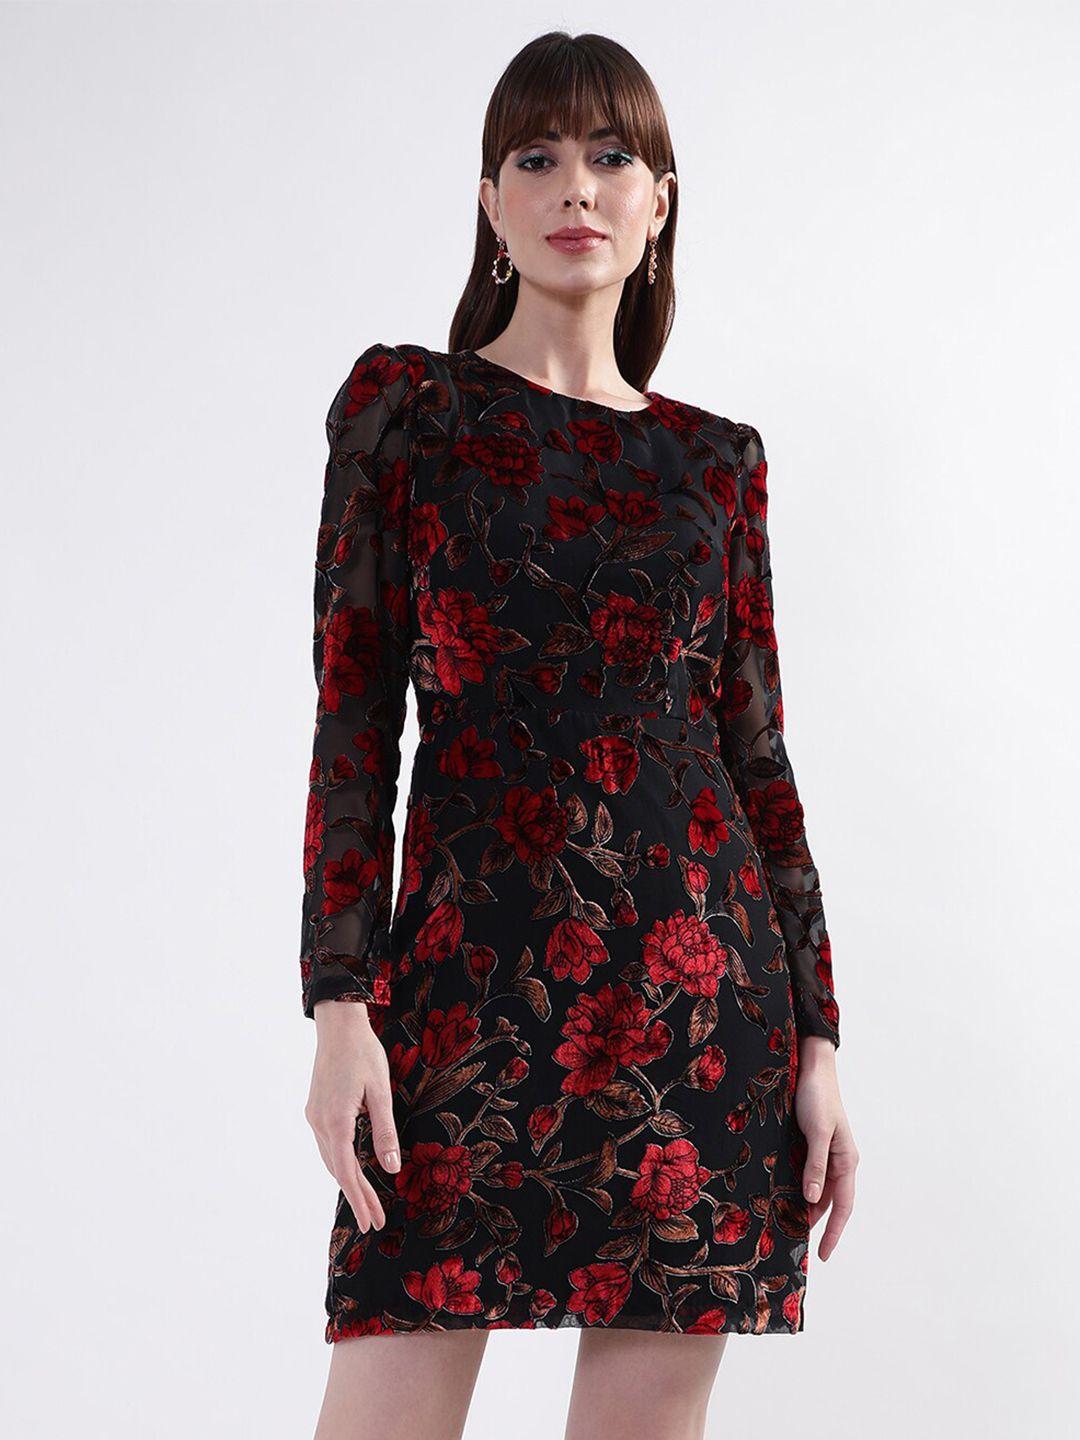 centrestage women black & red floral printed round neck sheath dress